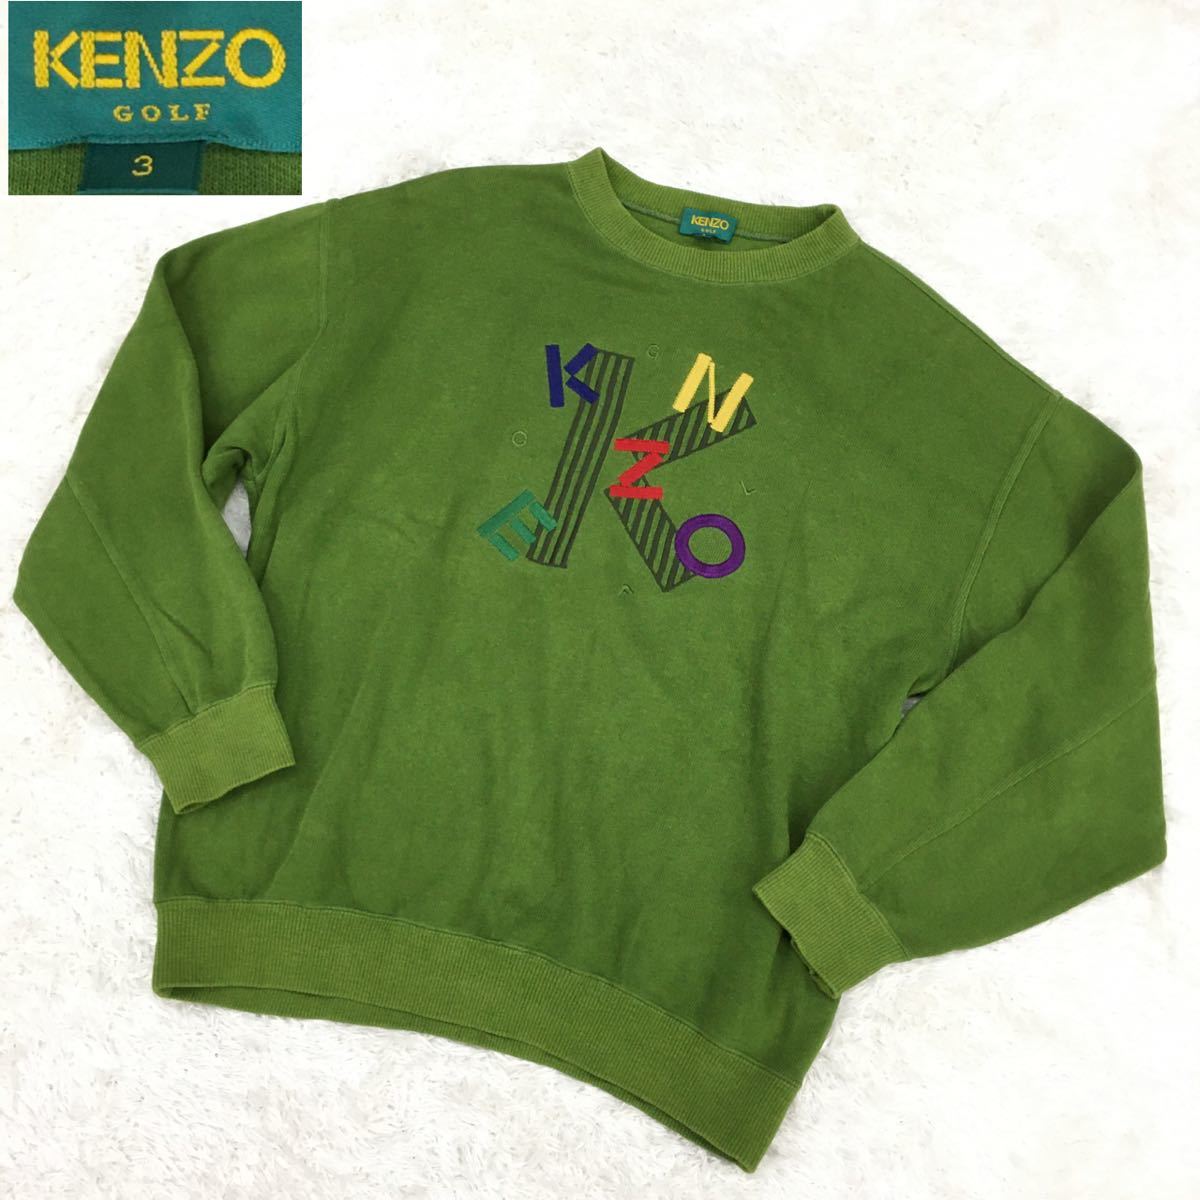 KENZO GOLF ケンゾー ゴルフウェア スポーツウェア トレーナー スウェット 長袖 プルオーバー コットン 刺繍ロゴ メンズ サイズ3 日本製  緑